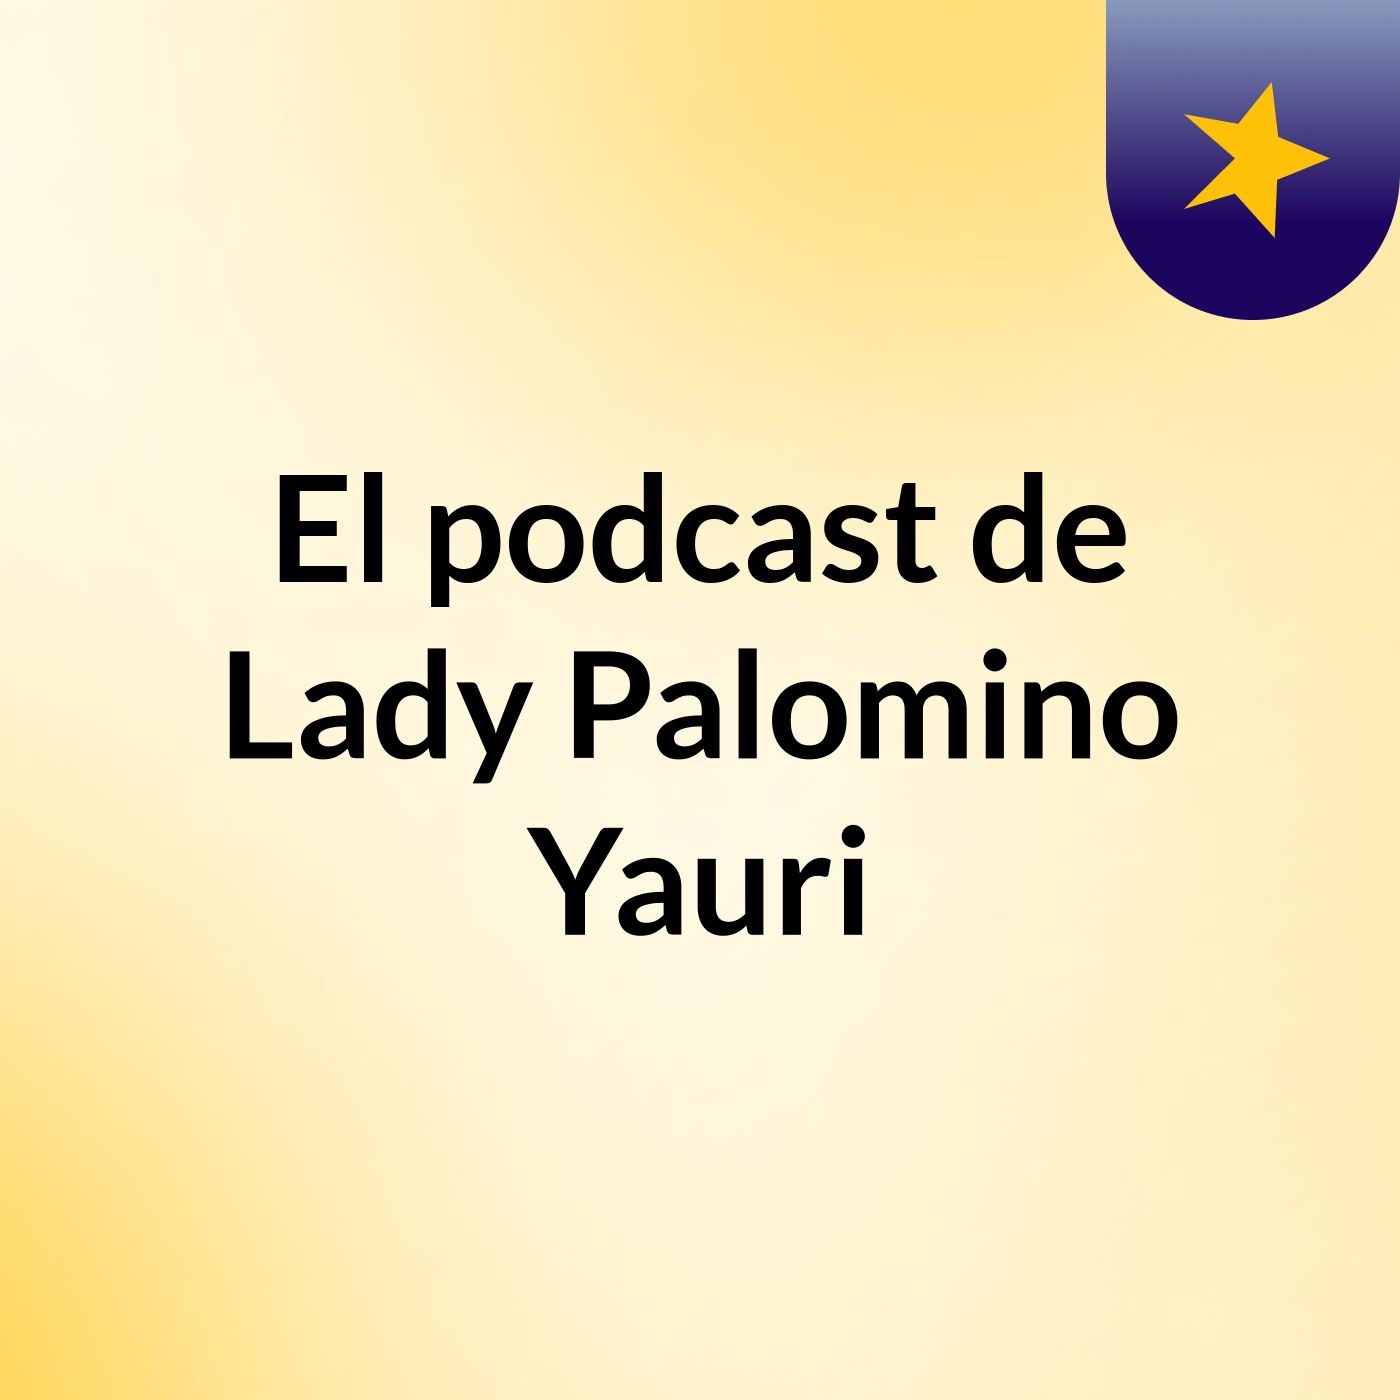 El podcast de Lady Palomino Yauri